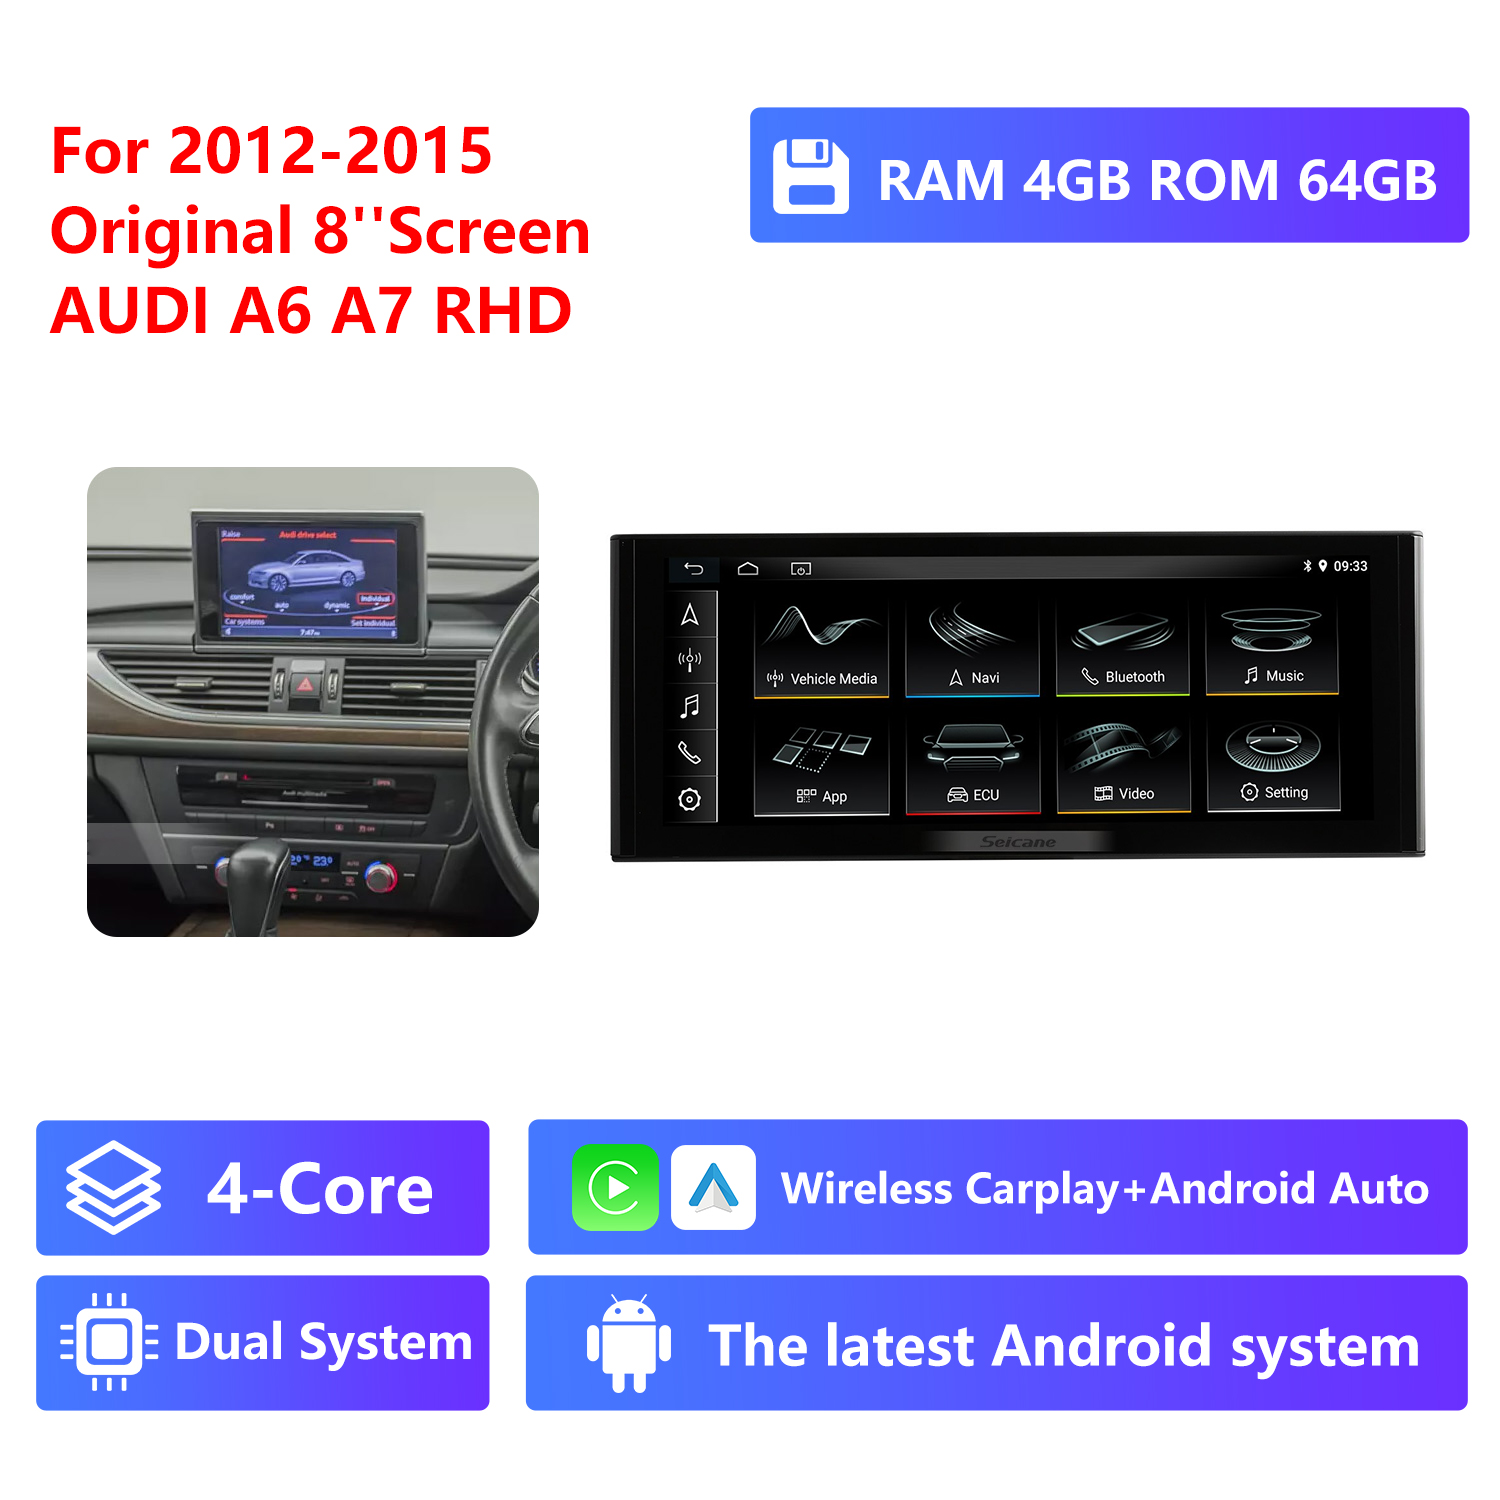 4-Core RAM 4G ROM 64G,2012-2015, Original 8"Screen,RHD